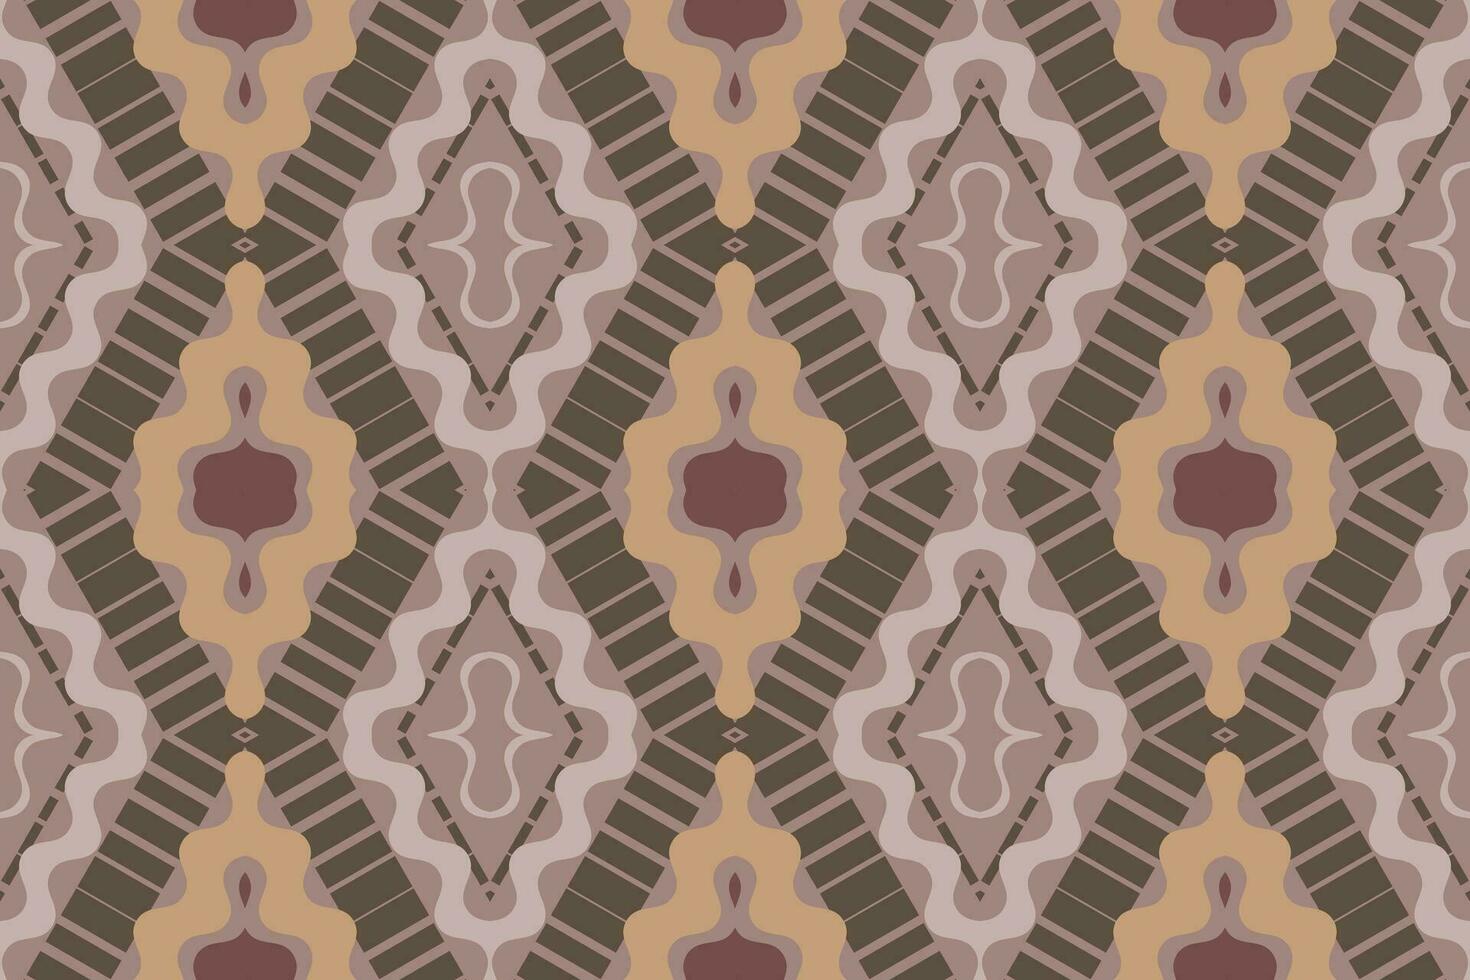 ikat blommig paisley broderi bakgrund. ikat bakgrund geometrisk etnisk orientalisk mönster traditionell.aztec stil abstrakt vektor illustration.design textur, tyg, kläder, inslagning, sarong.